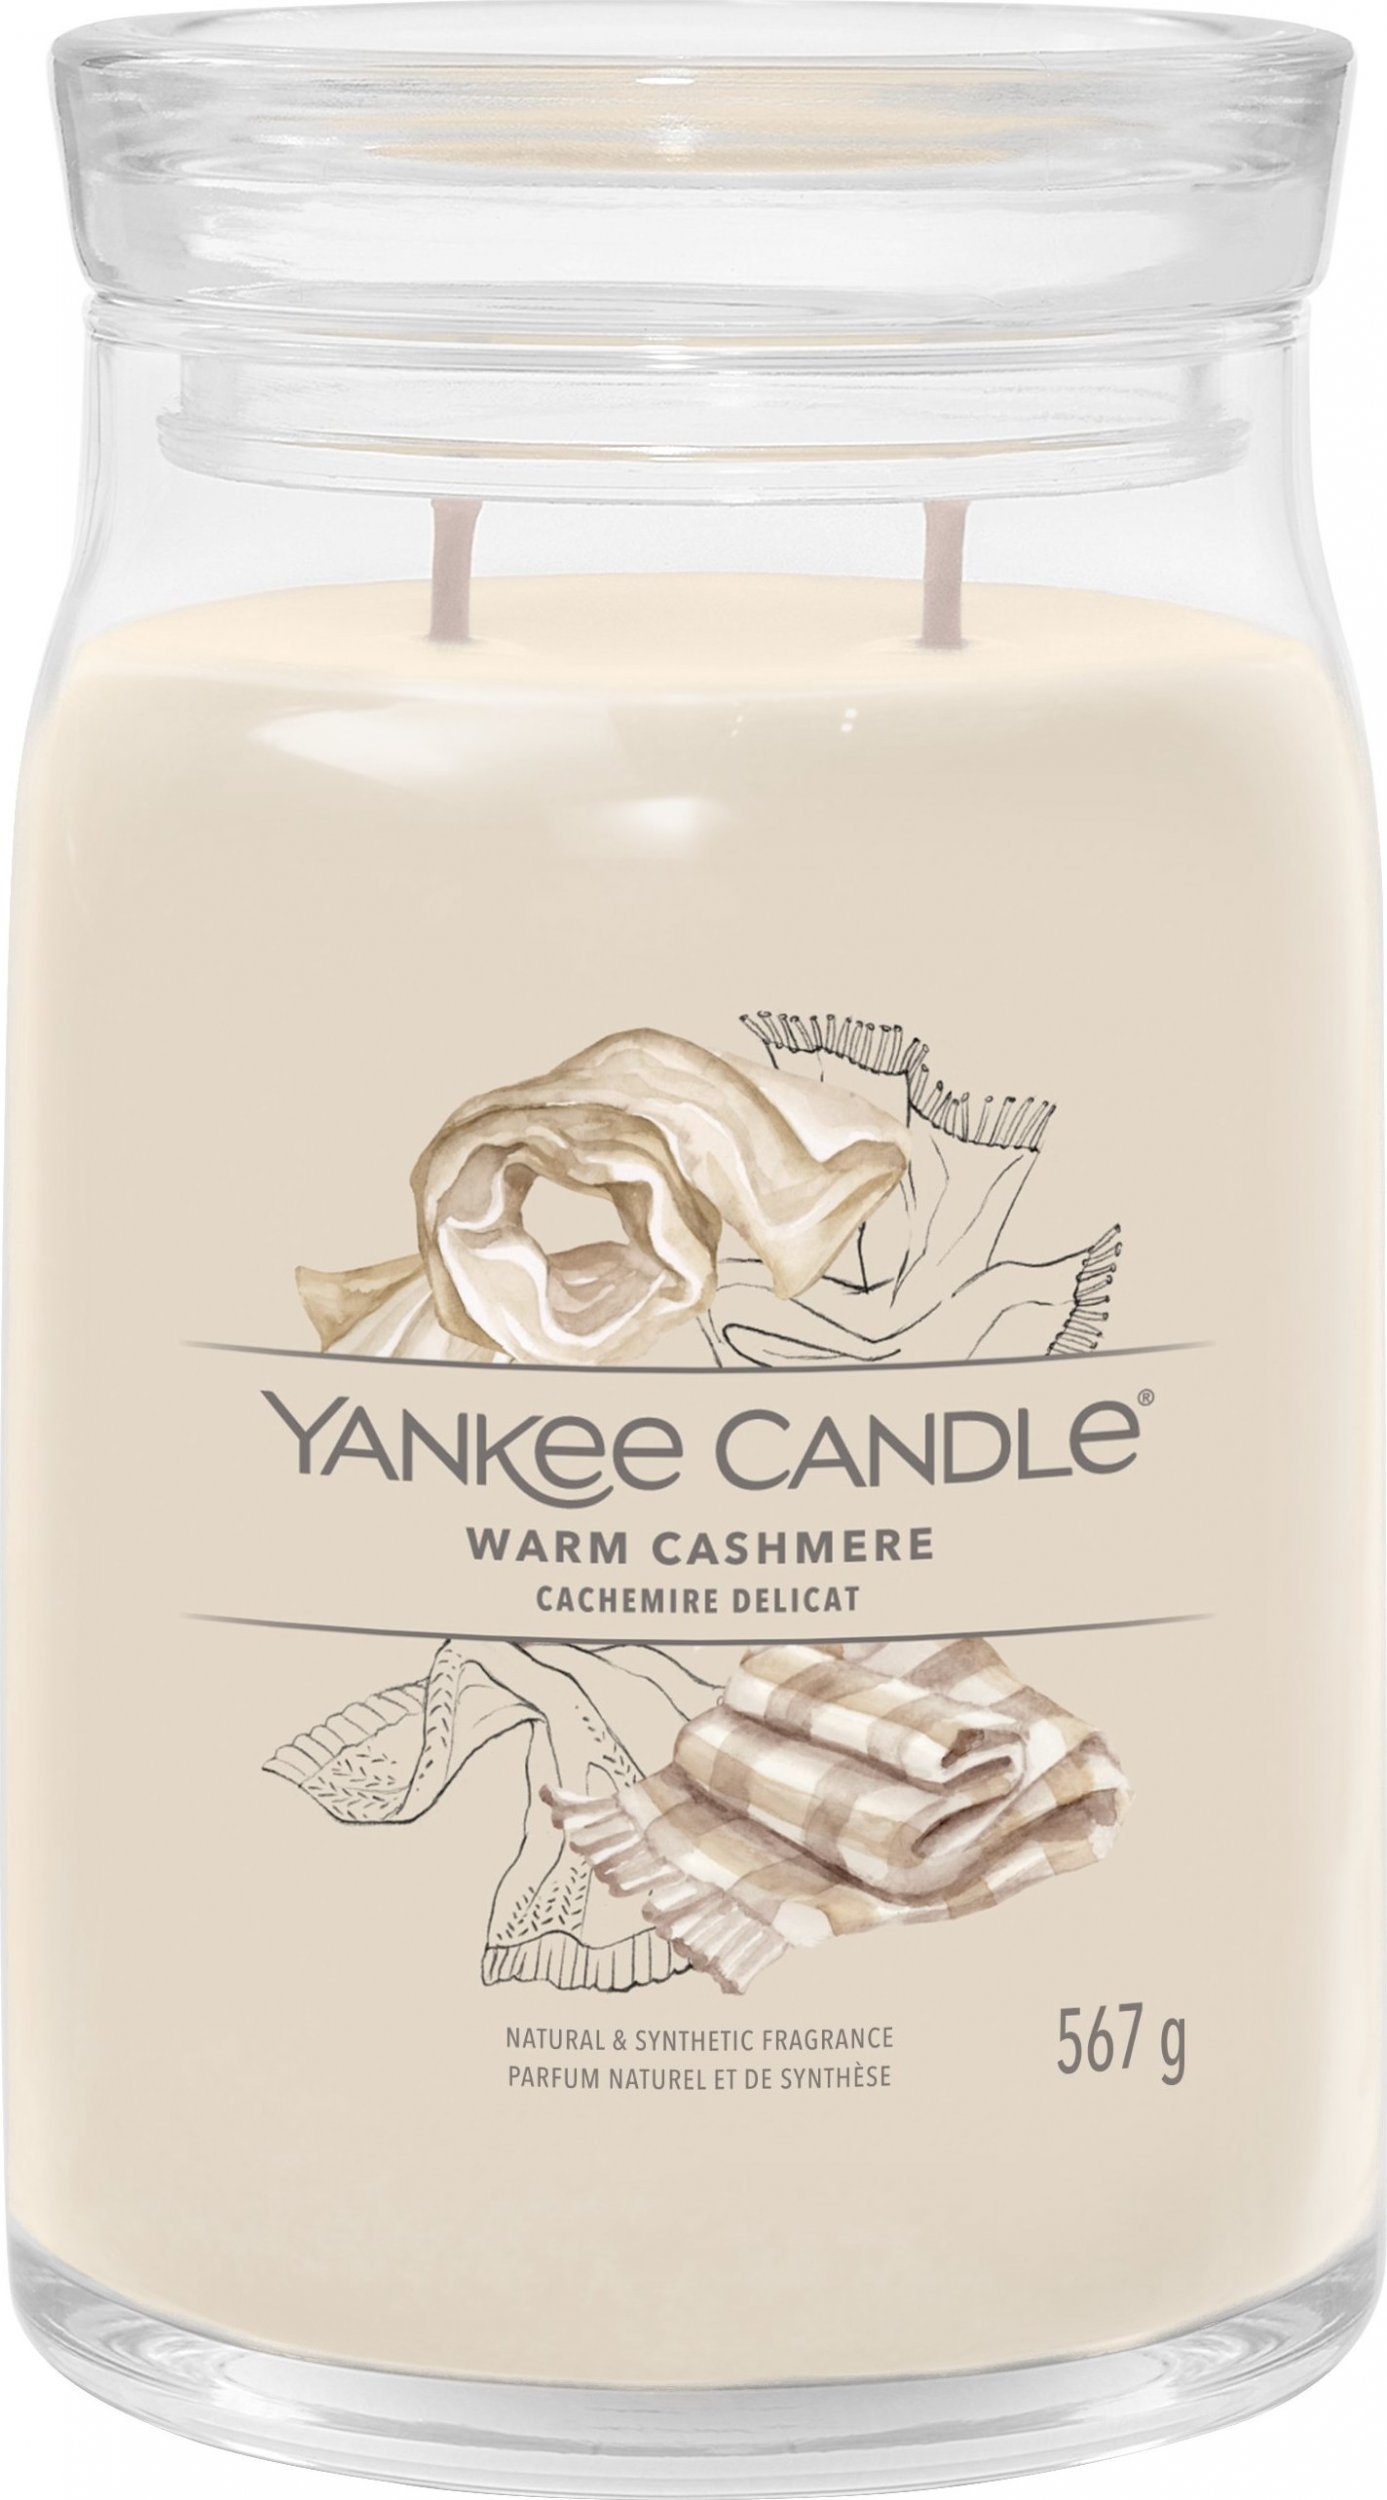 Lumânare Yankee Candle Yankee Candle Signature Warm Cashmere Lumanare mare 567g